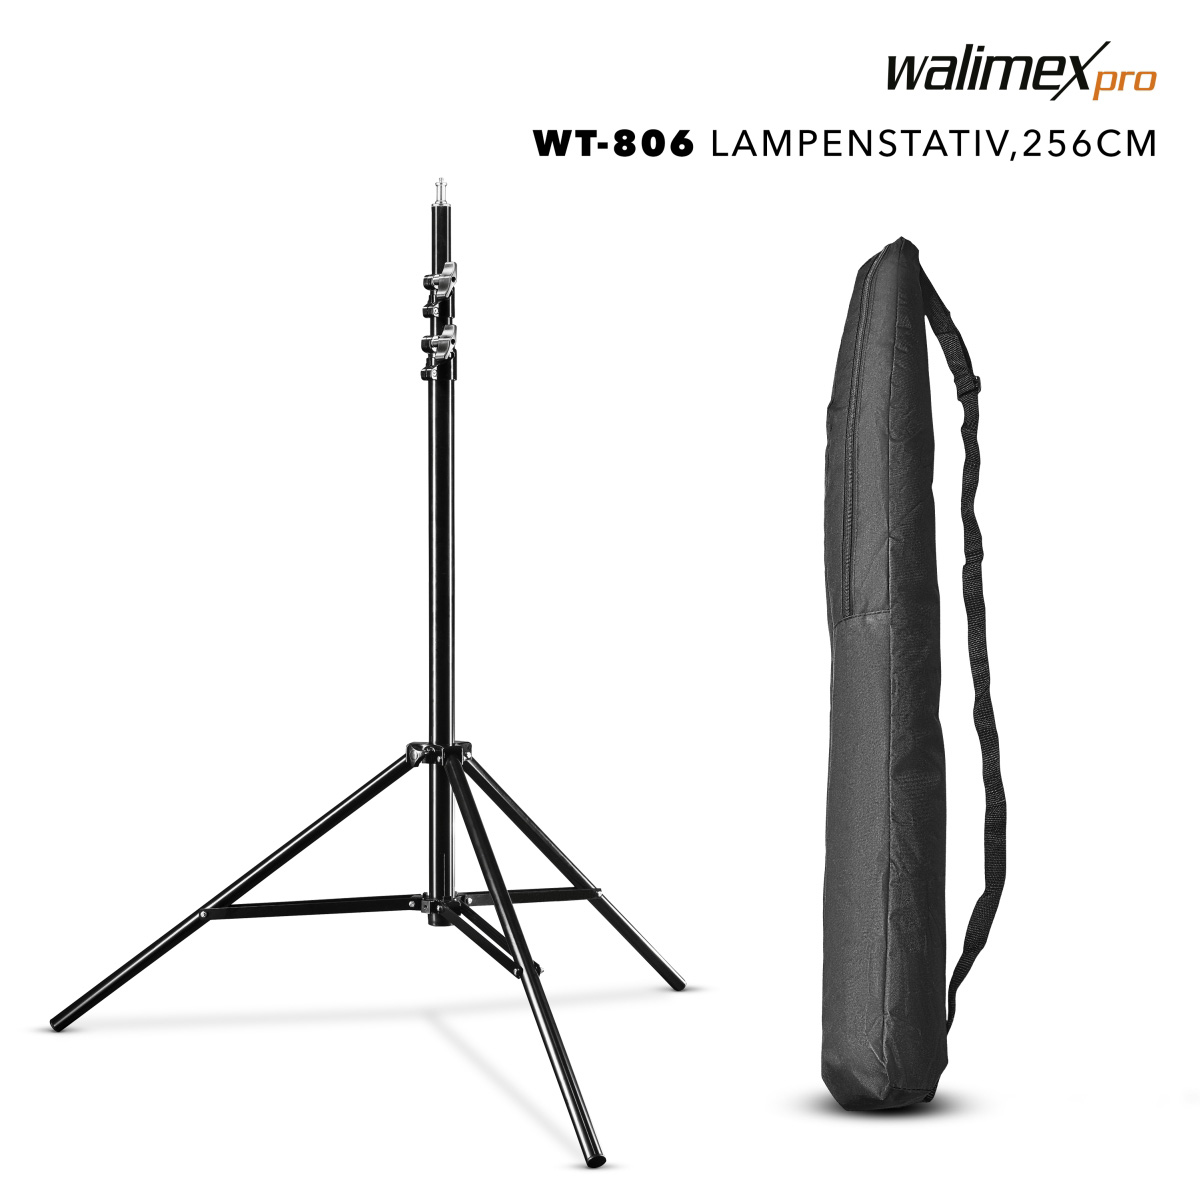 Walimex pro WT-806 Lampenstativ 256 cm